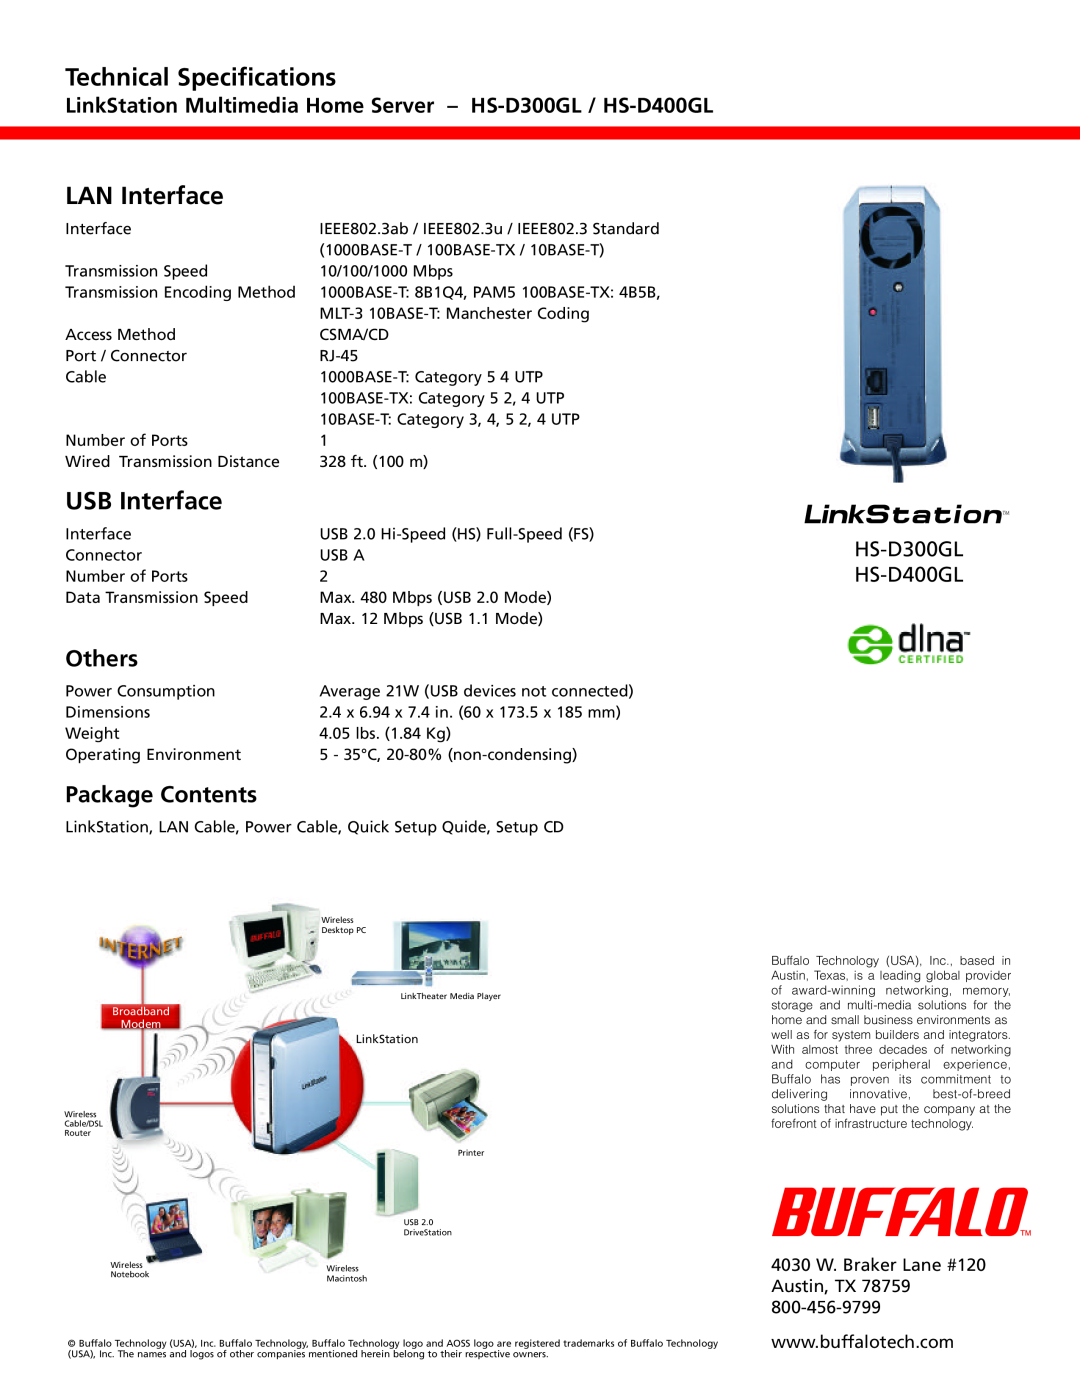 Buffalo Technology LinkStation Multimedia Home Server - HS-D300GL / HS-D400GL, Technical Specifications, LAN Interface 